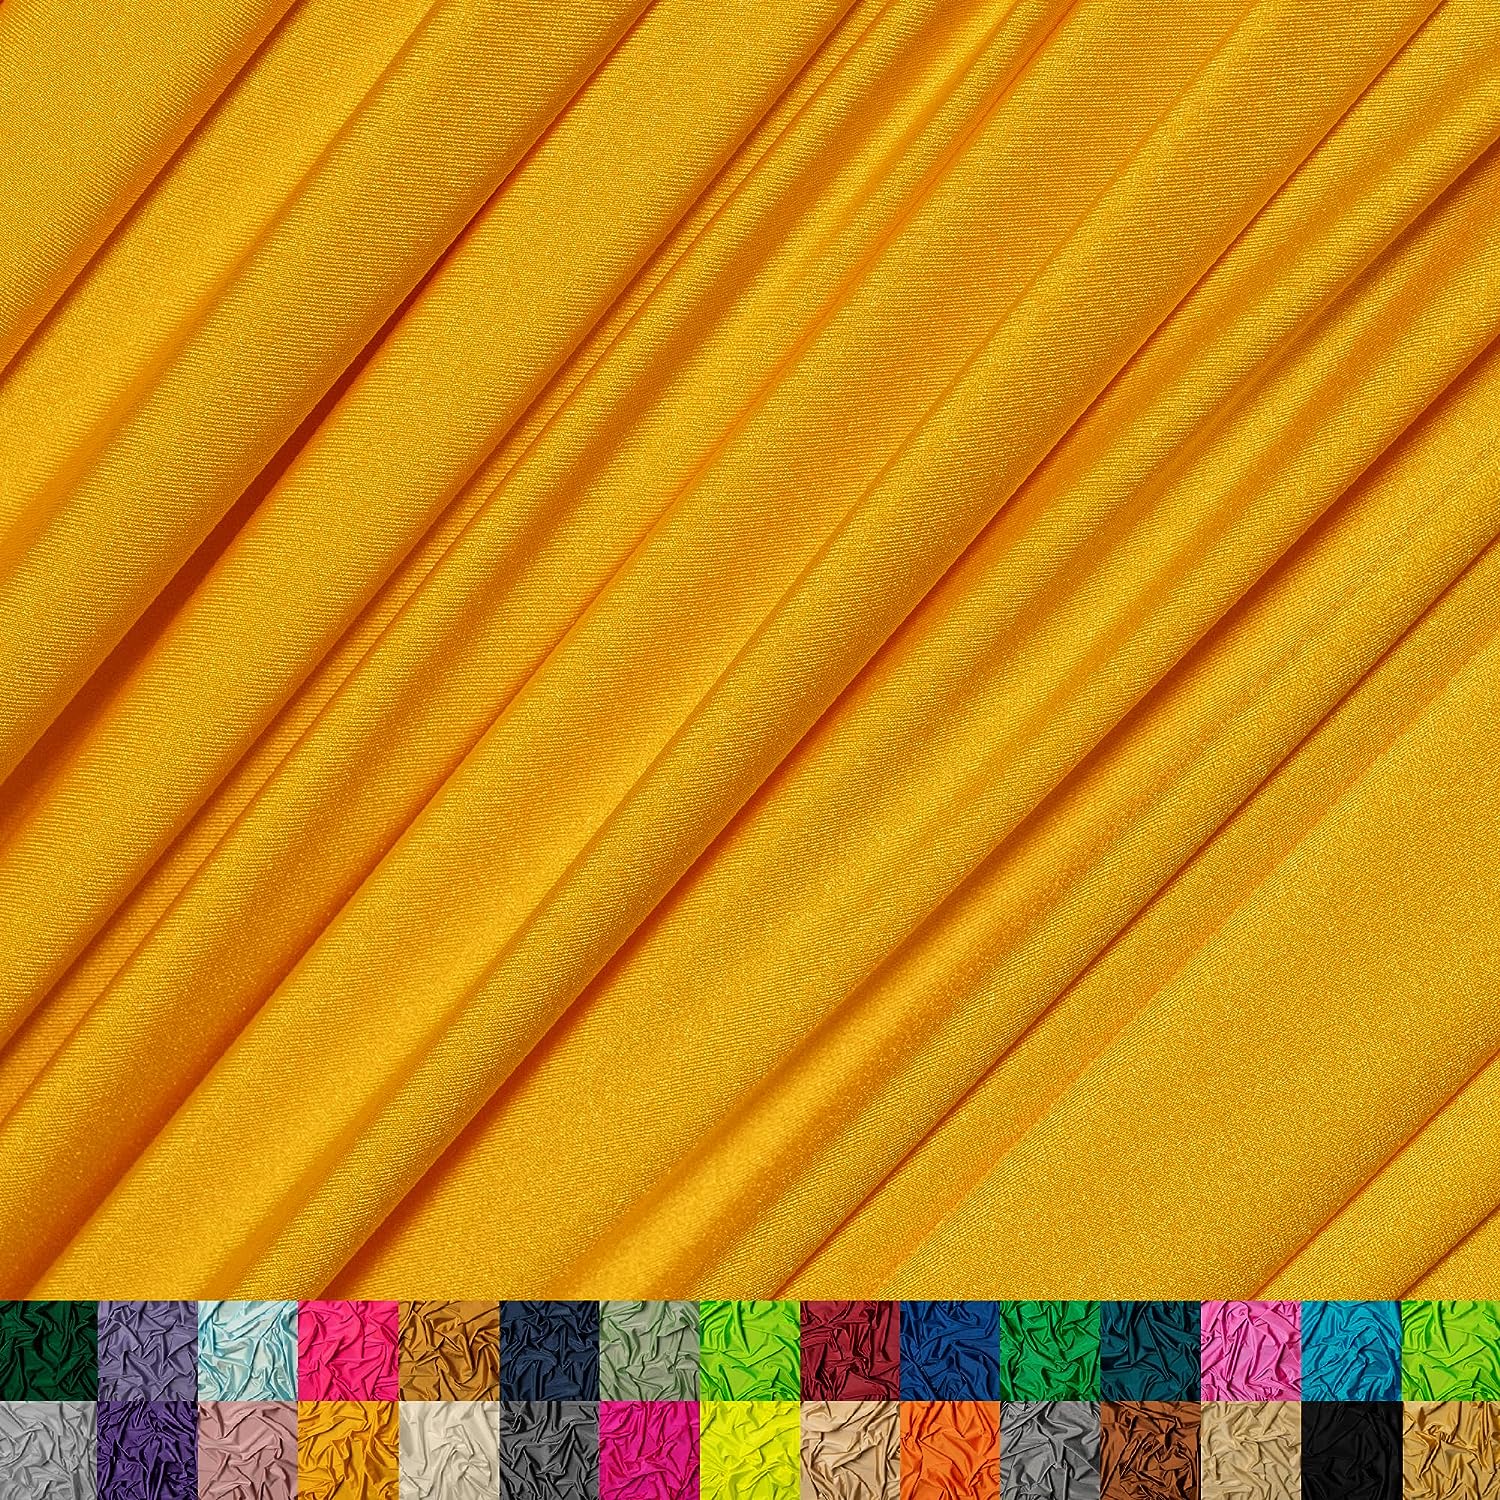 Canary Yellow Luxury Nylon Spandex Fabric By The YardICE FABRICSICE FABRICSBy The Yard (58" Width)Canary Yellow Luxury Nylon Spandex Fabric By The Yard ICE FABRICS